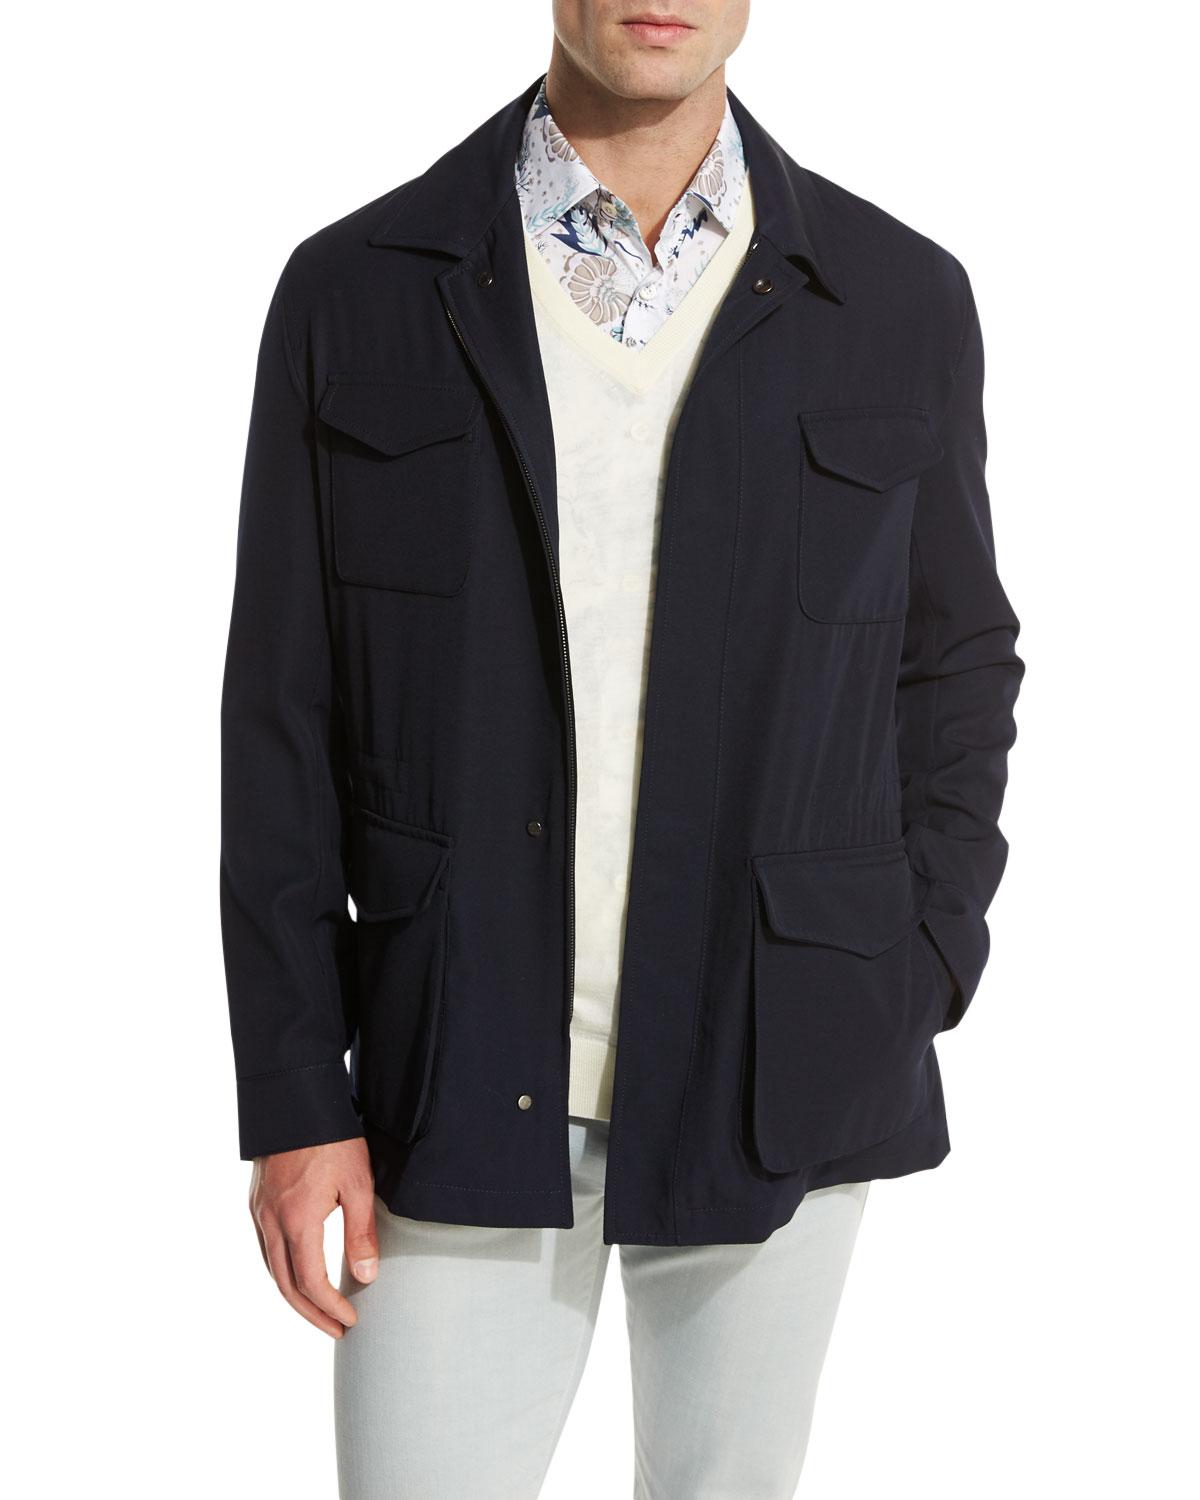 Kiton Wool Classic Safari Jacket in Navy (Blue) for Men - Lyst